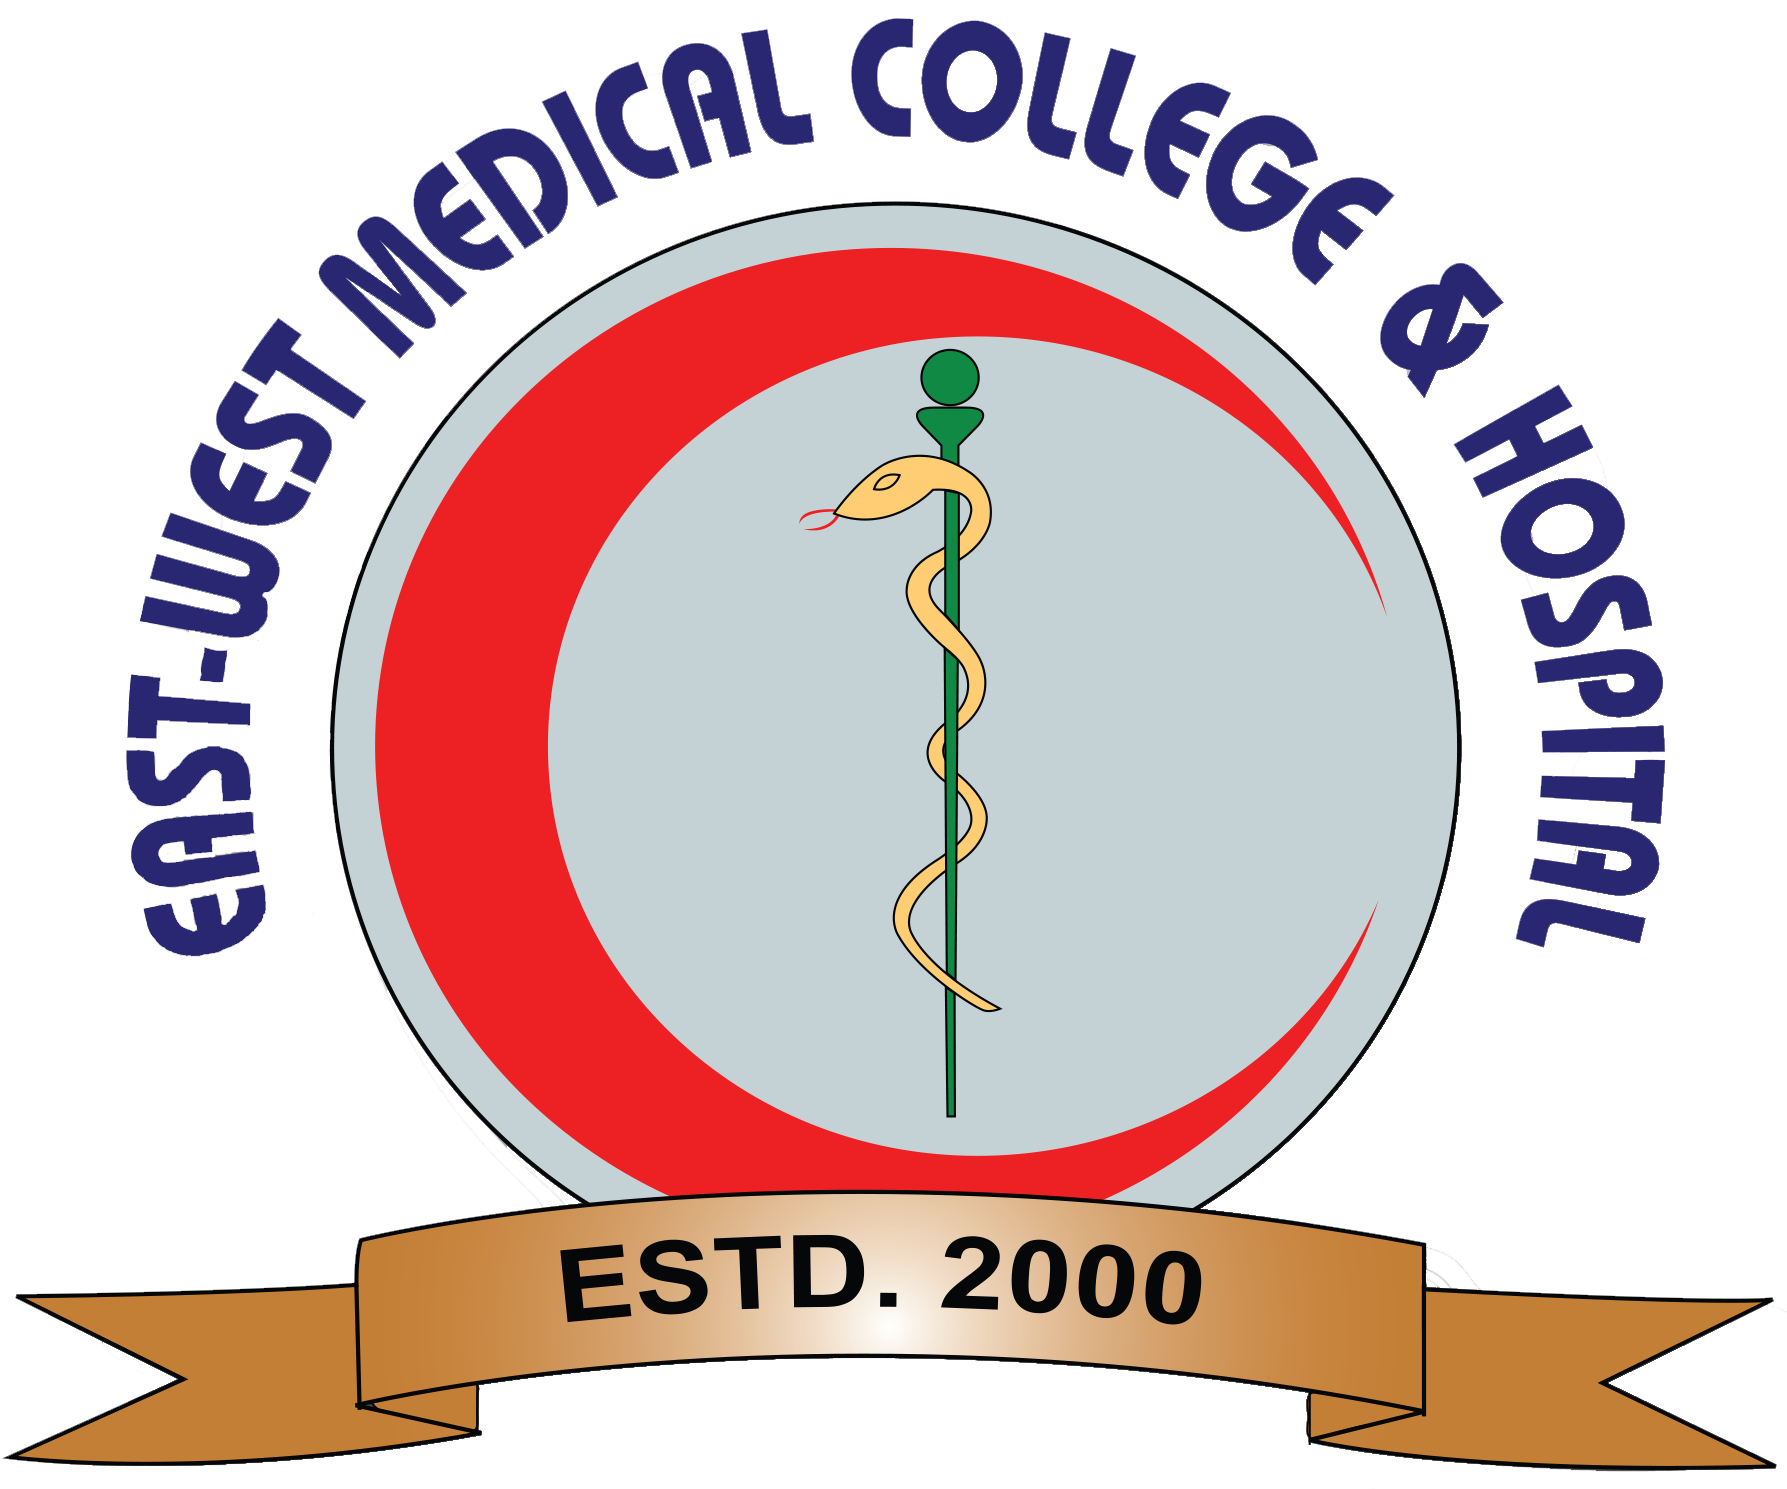 East-West Medical College and Hospital-logo